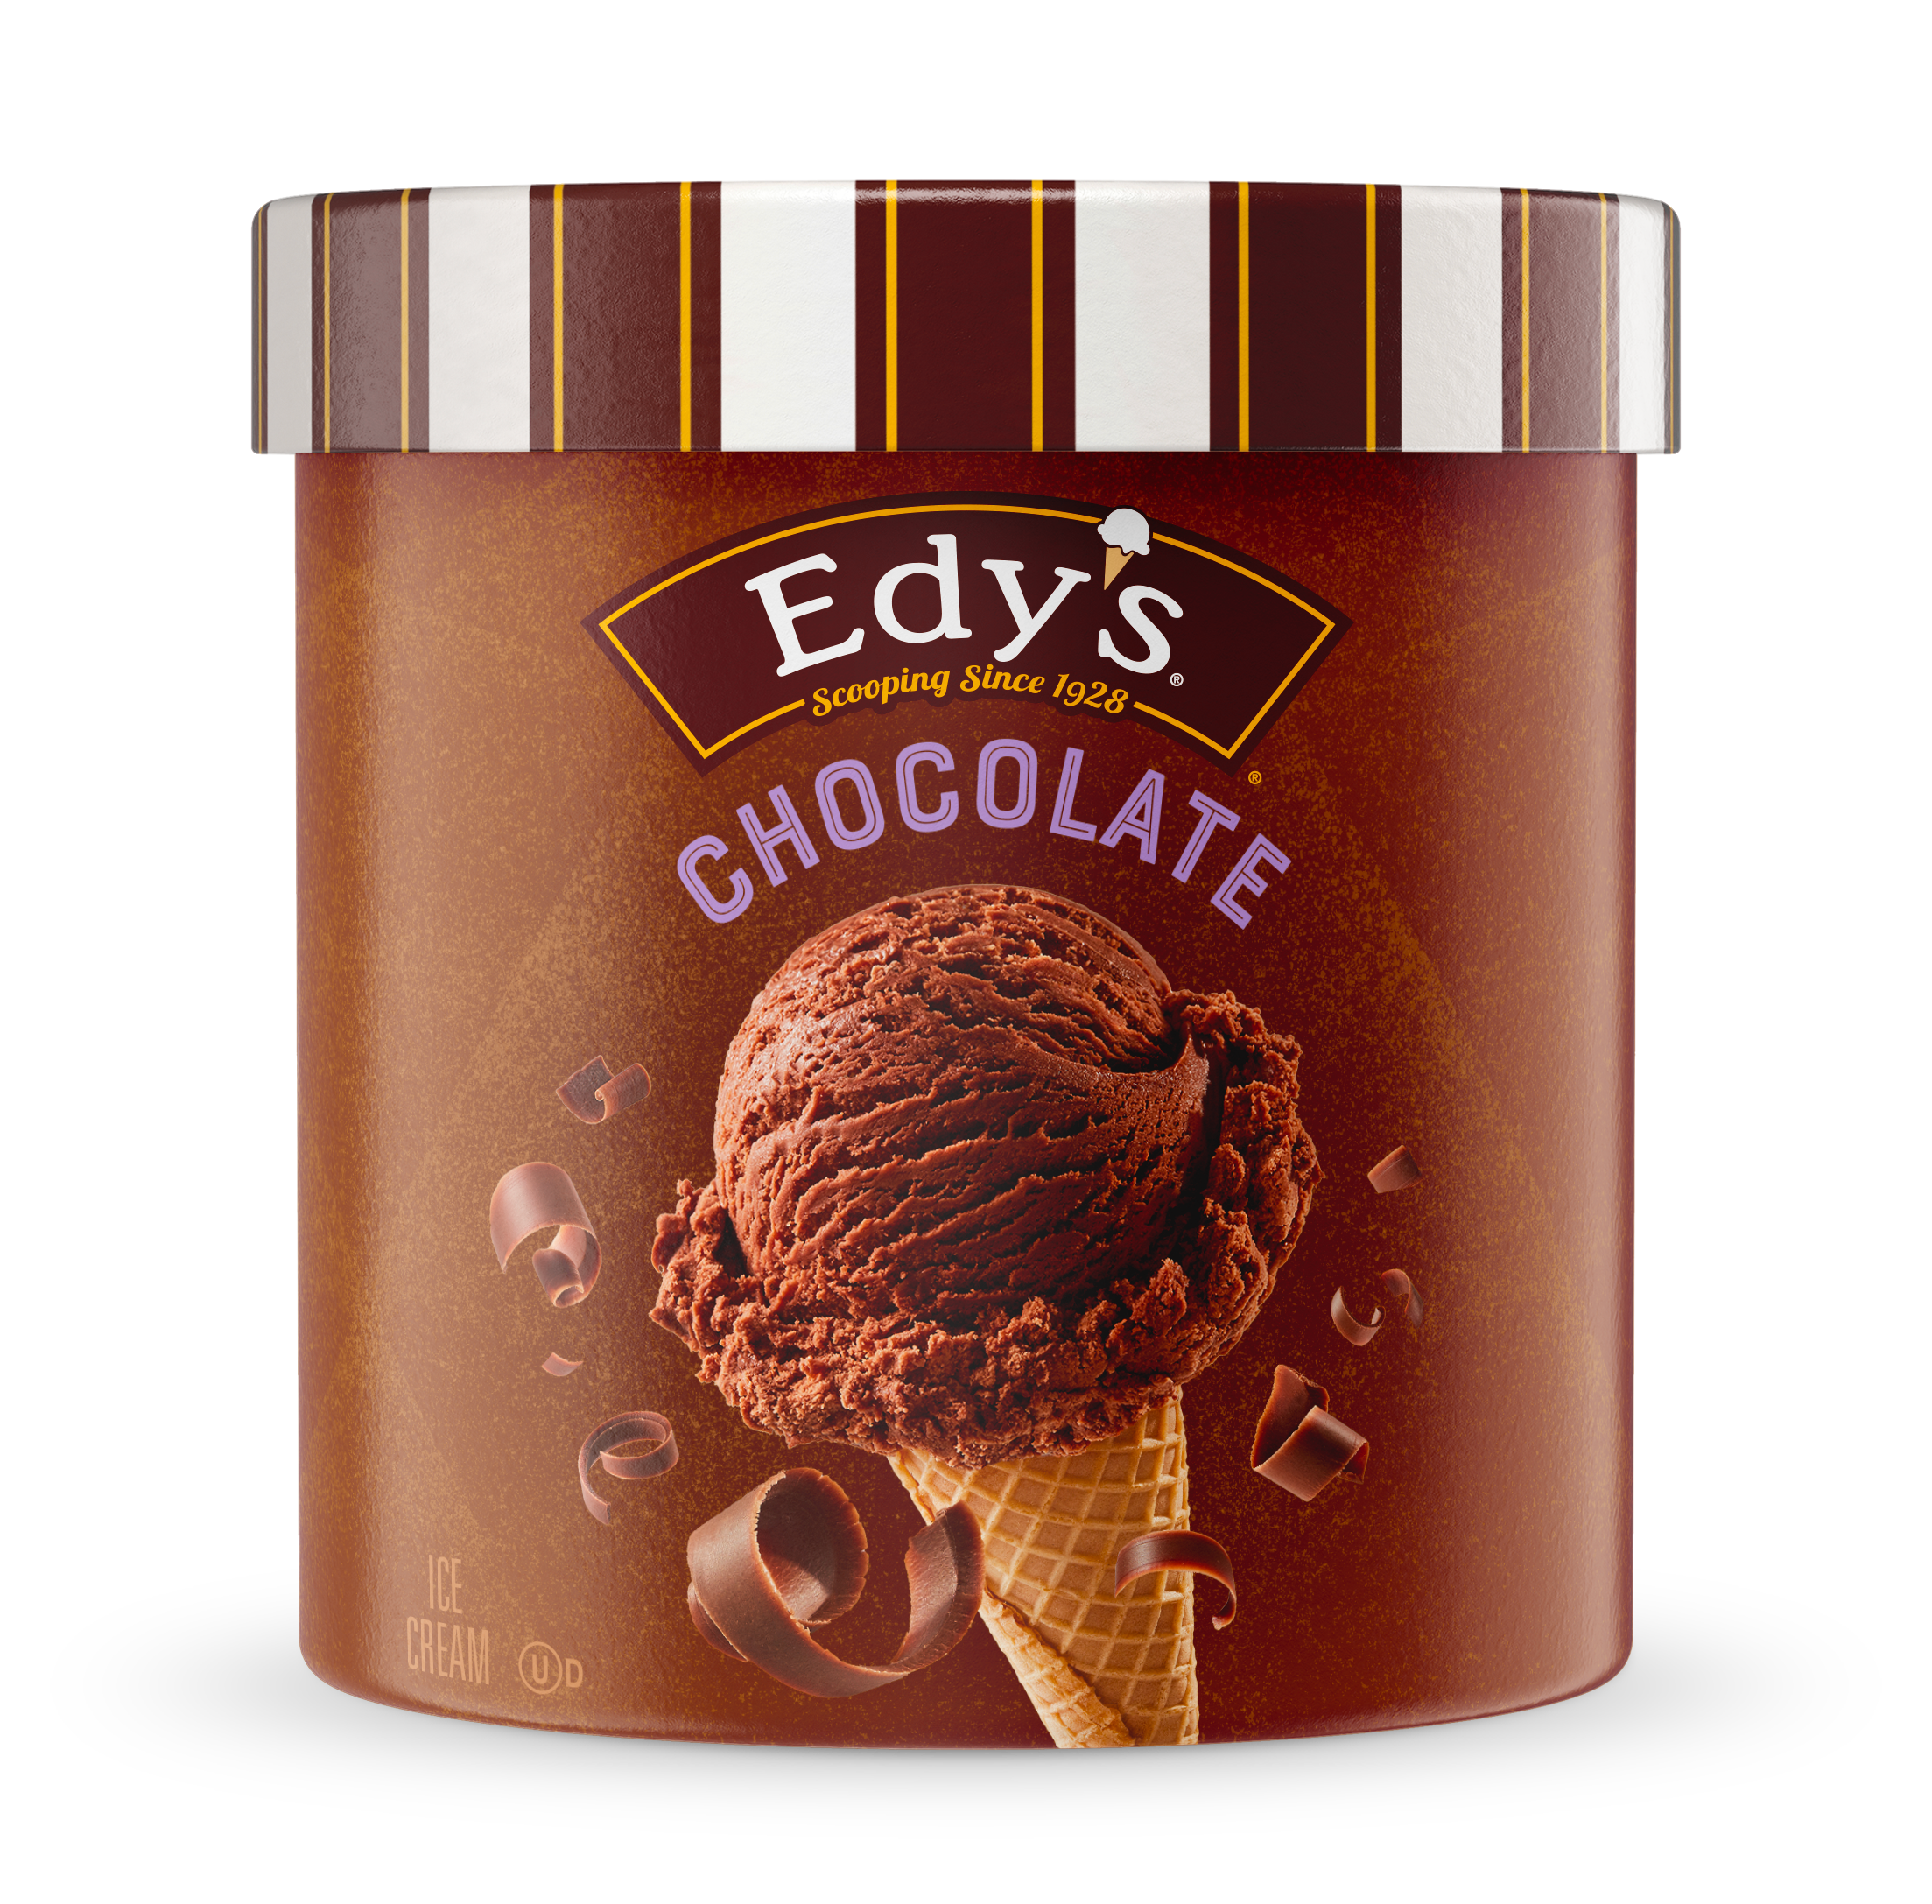 Carton of Edy's chocolate ice cream